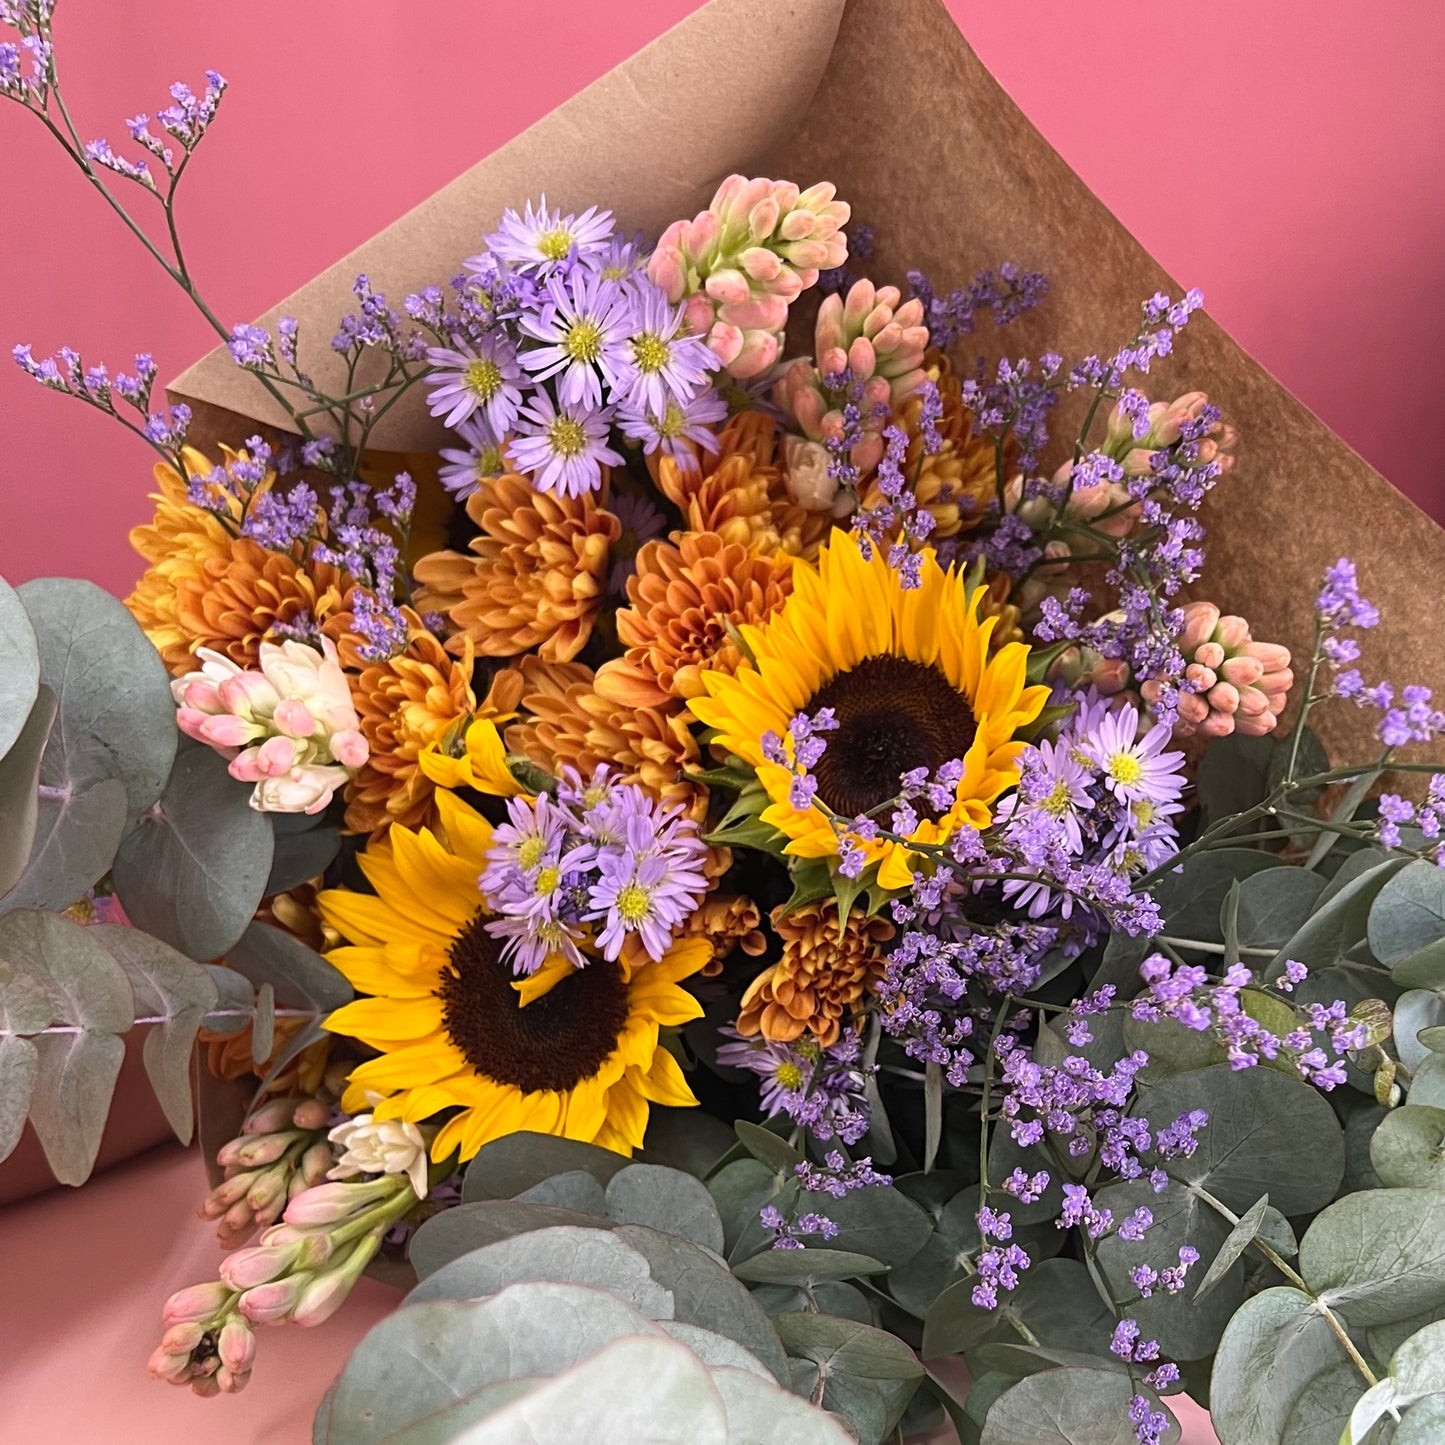 The Bloom Studio - Florist Choice